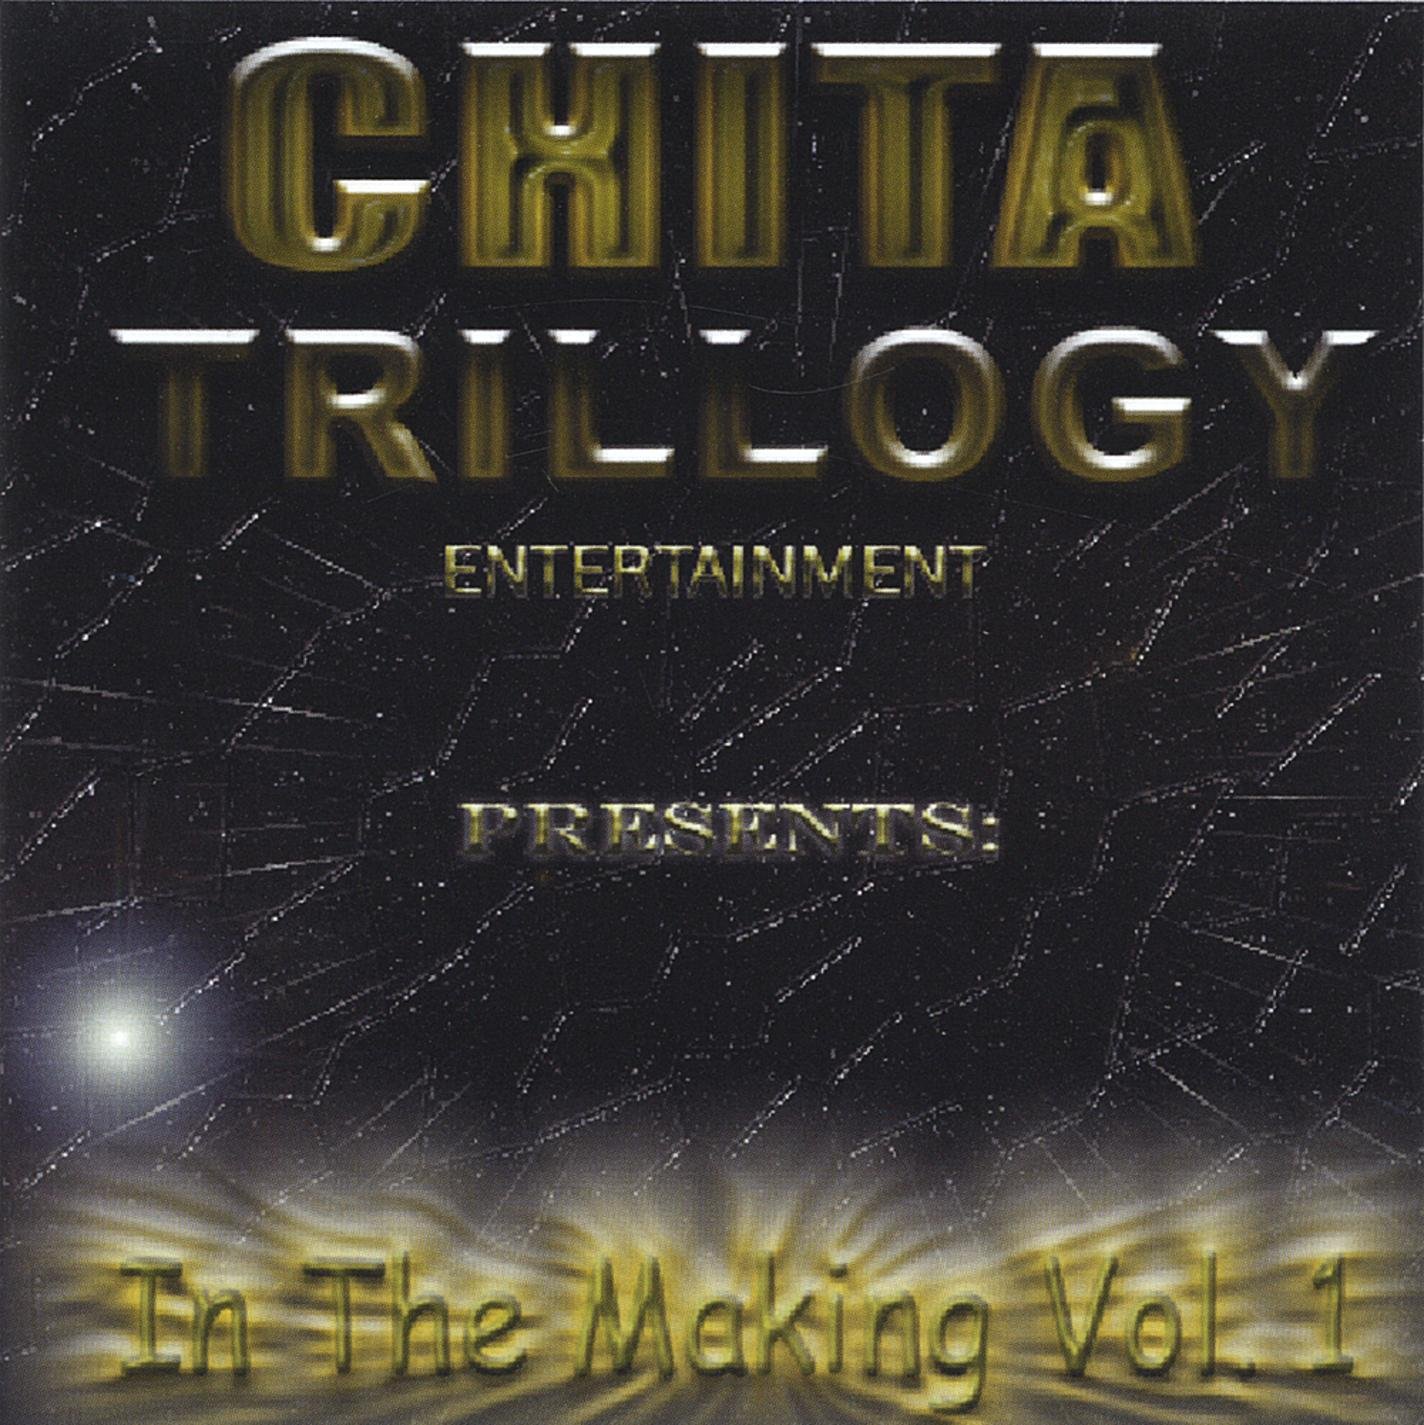 Chita Trillogy Entertainment Presents-In The Making Vol. 1-CD-FLAC-2004-RAGEFLAC